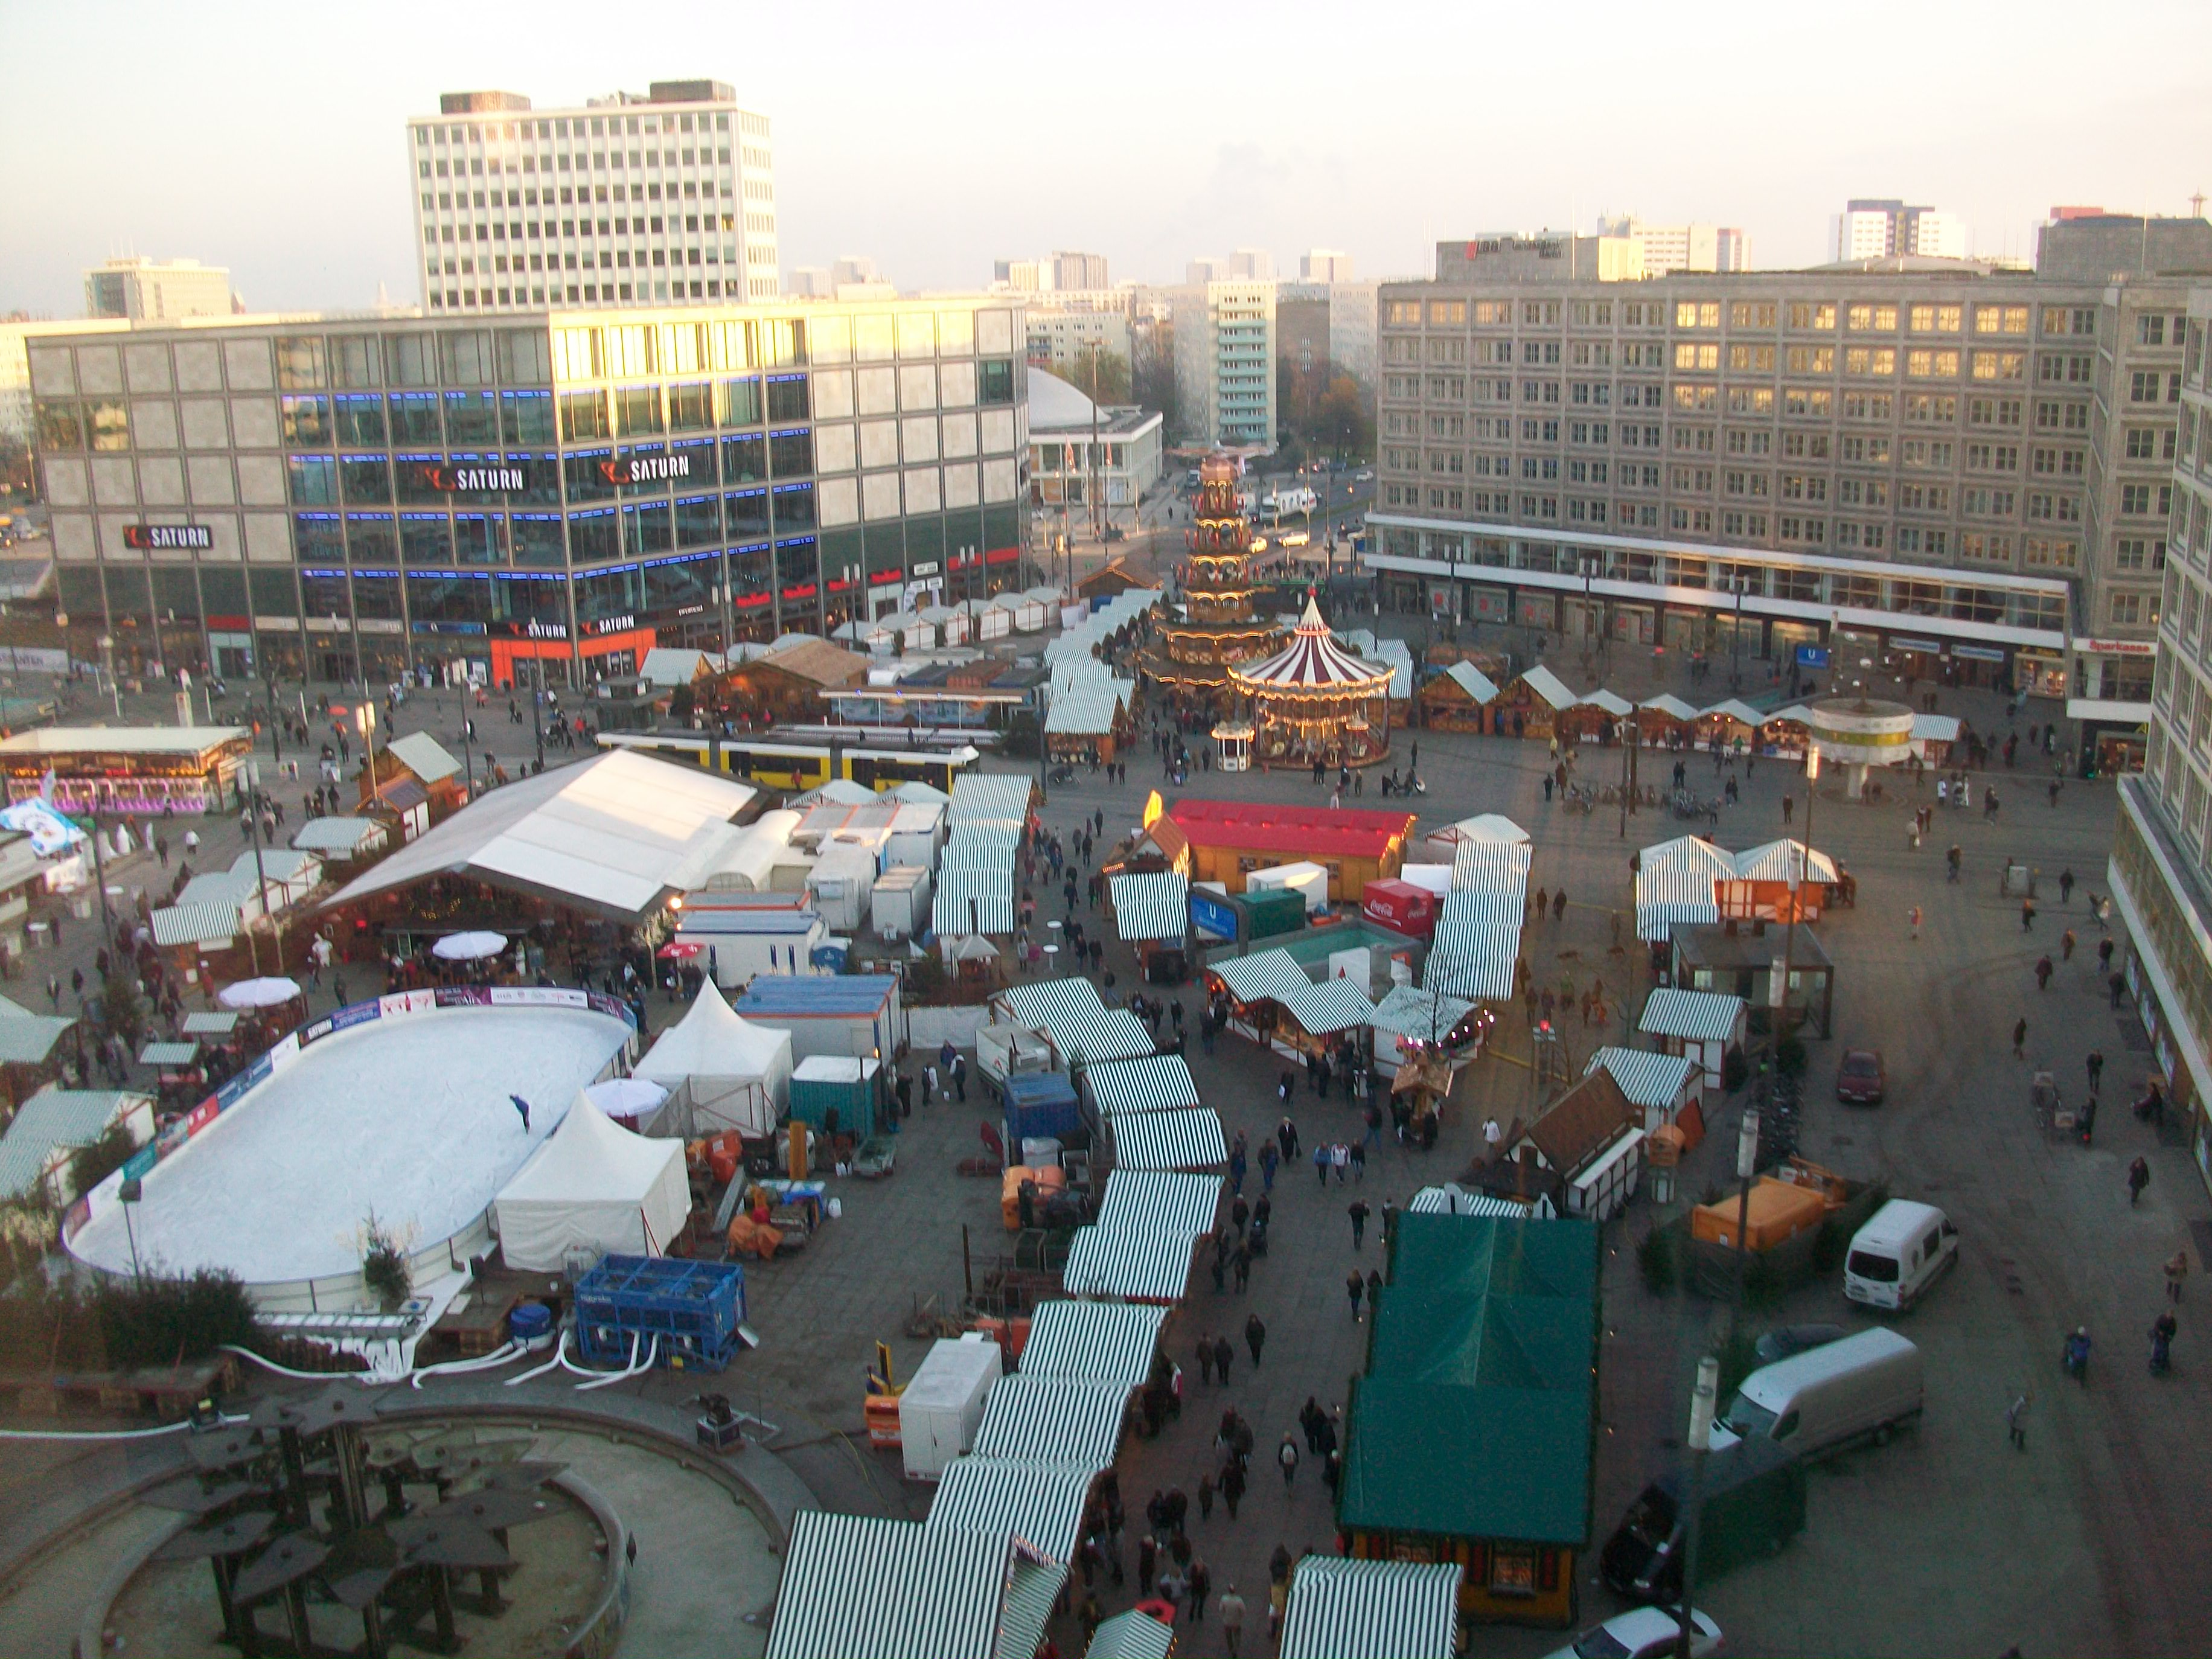 Alexanderplatz christmas market being enjoyed by many